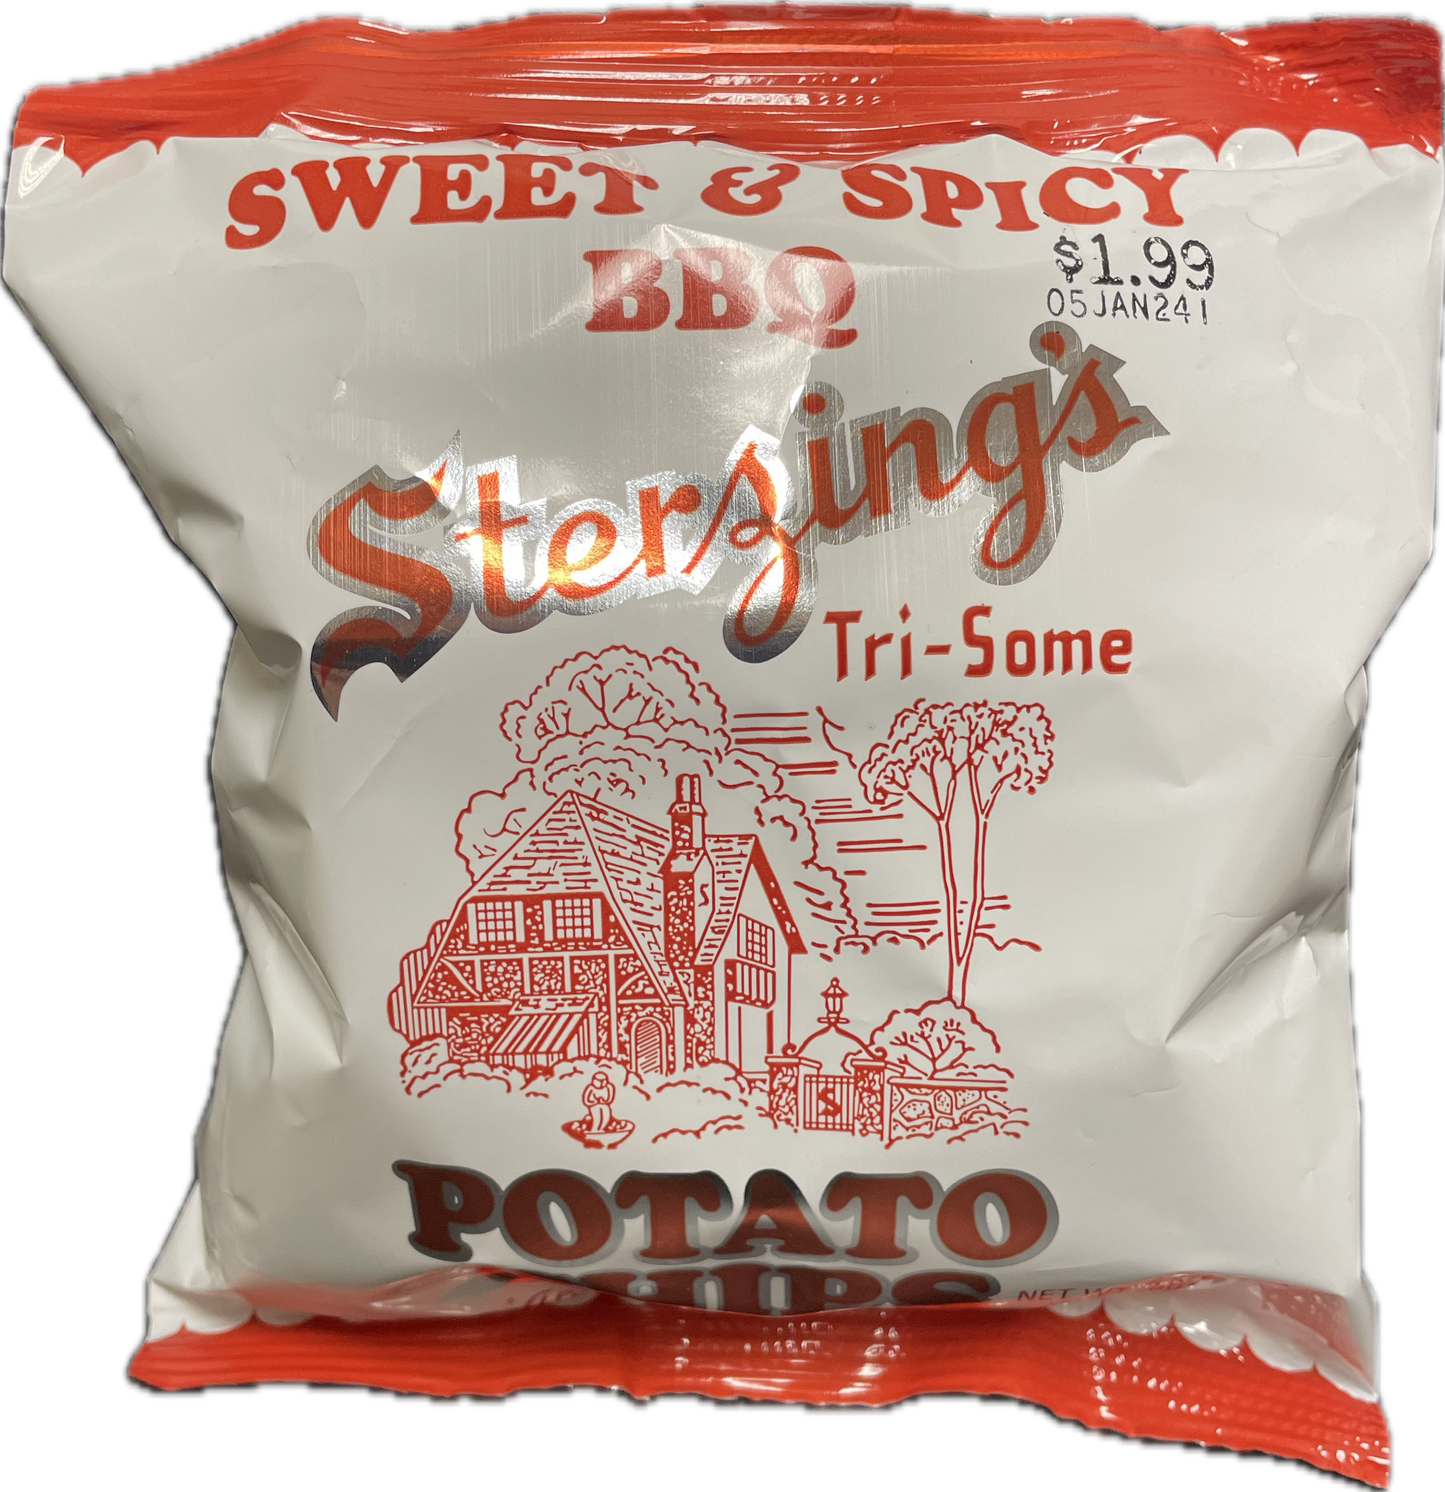 Sterzing’s Potato Chips - Sweet & Spicy BBQ Flavor - Snack Size 2.62 Oz Bag